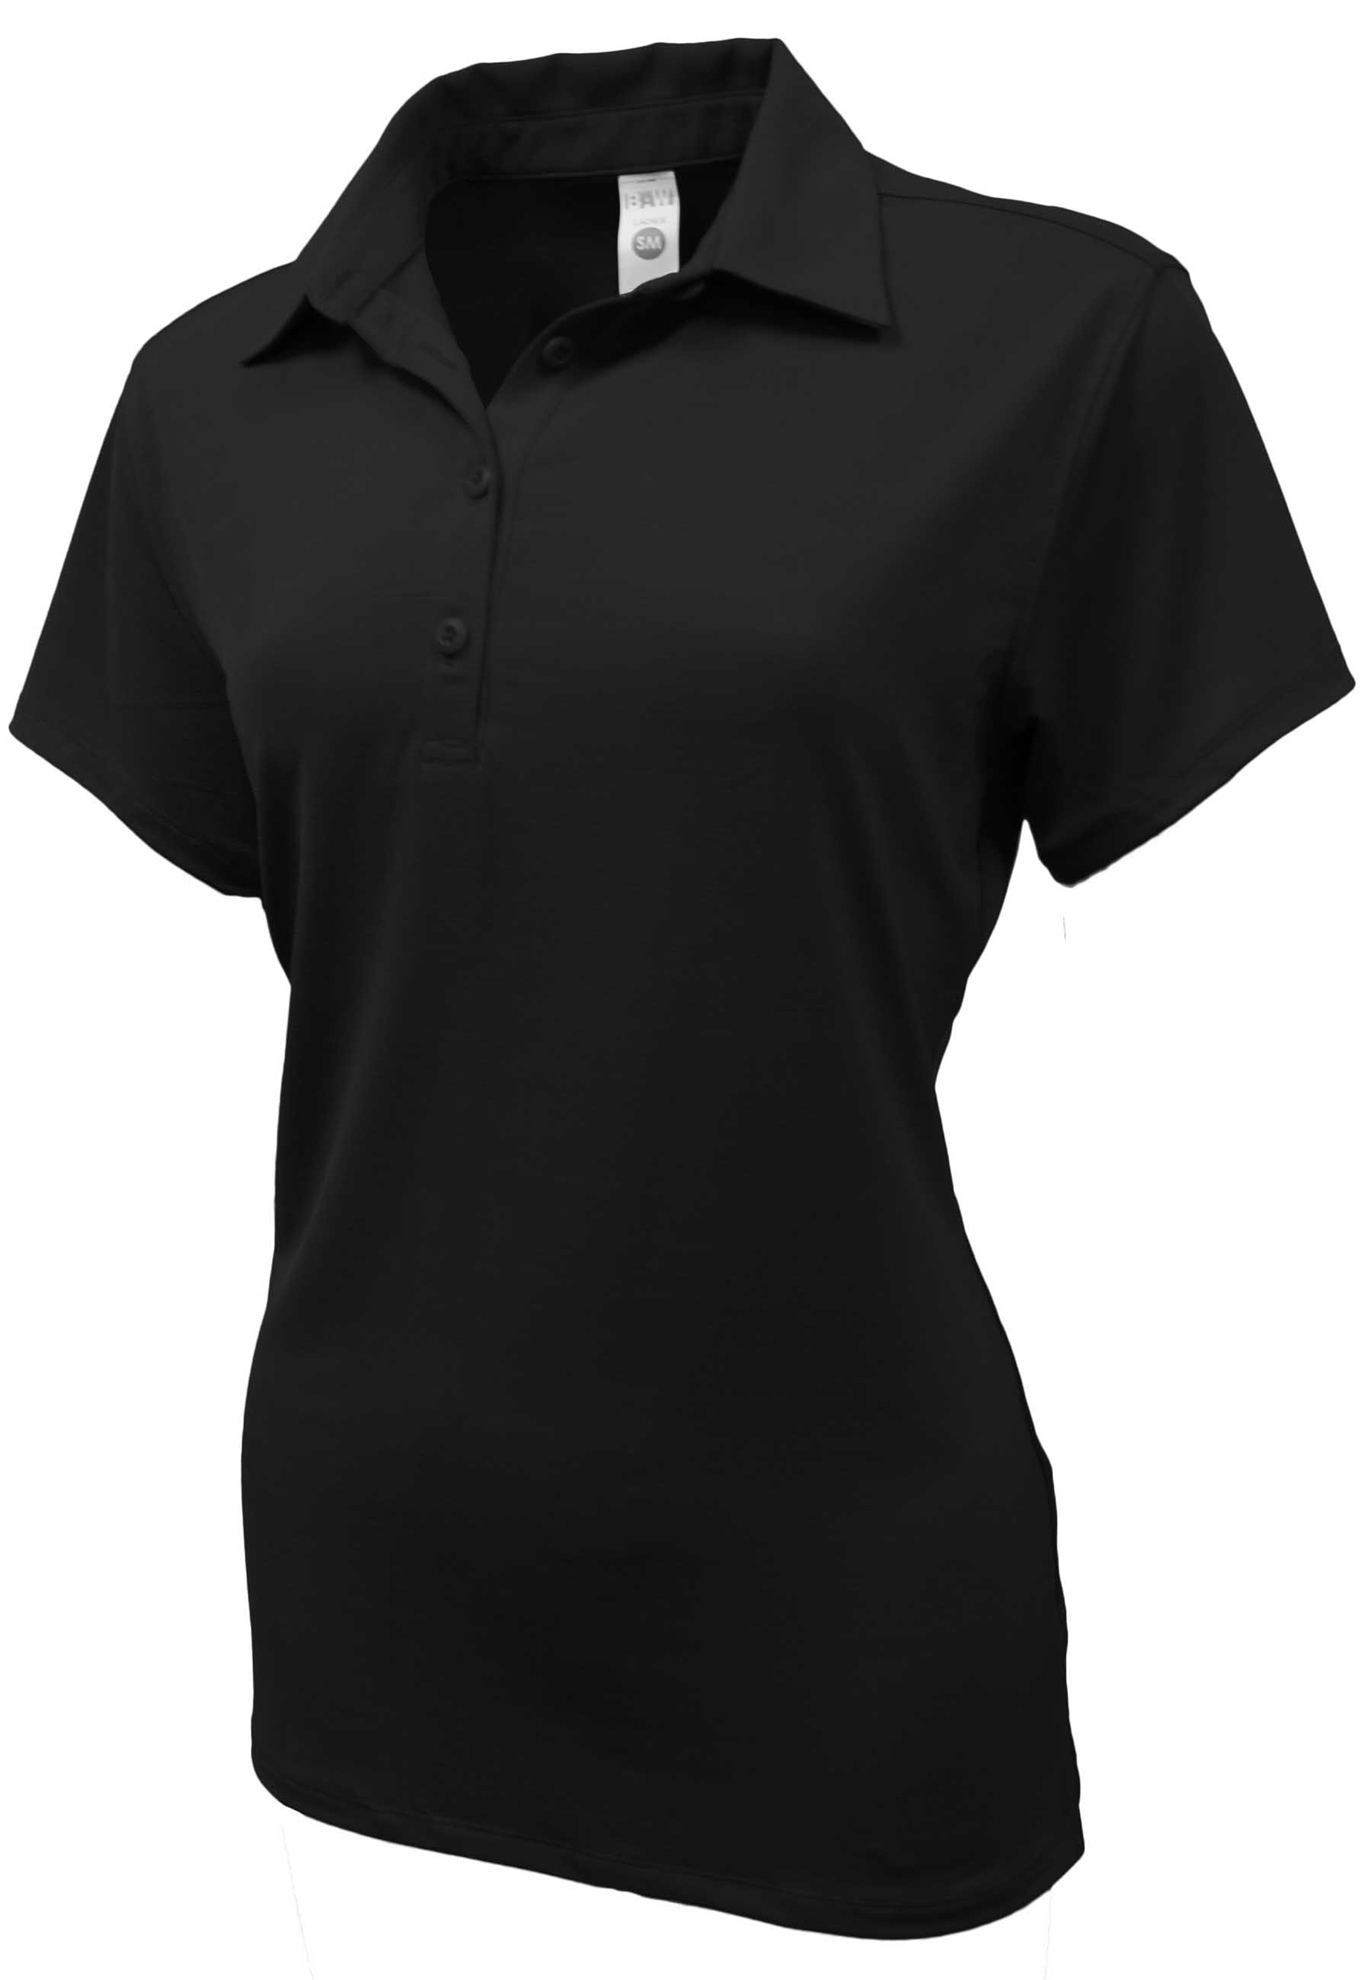 BAW Athletic Wear JQ4041 - Ladies Horizon Spandex Polo